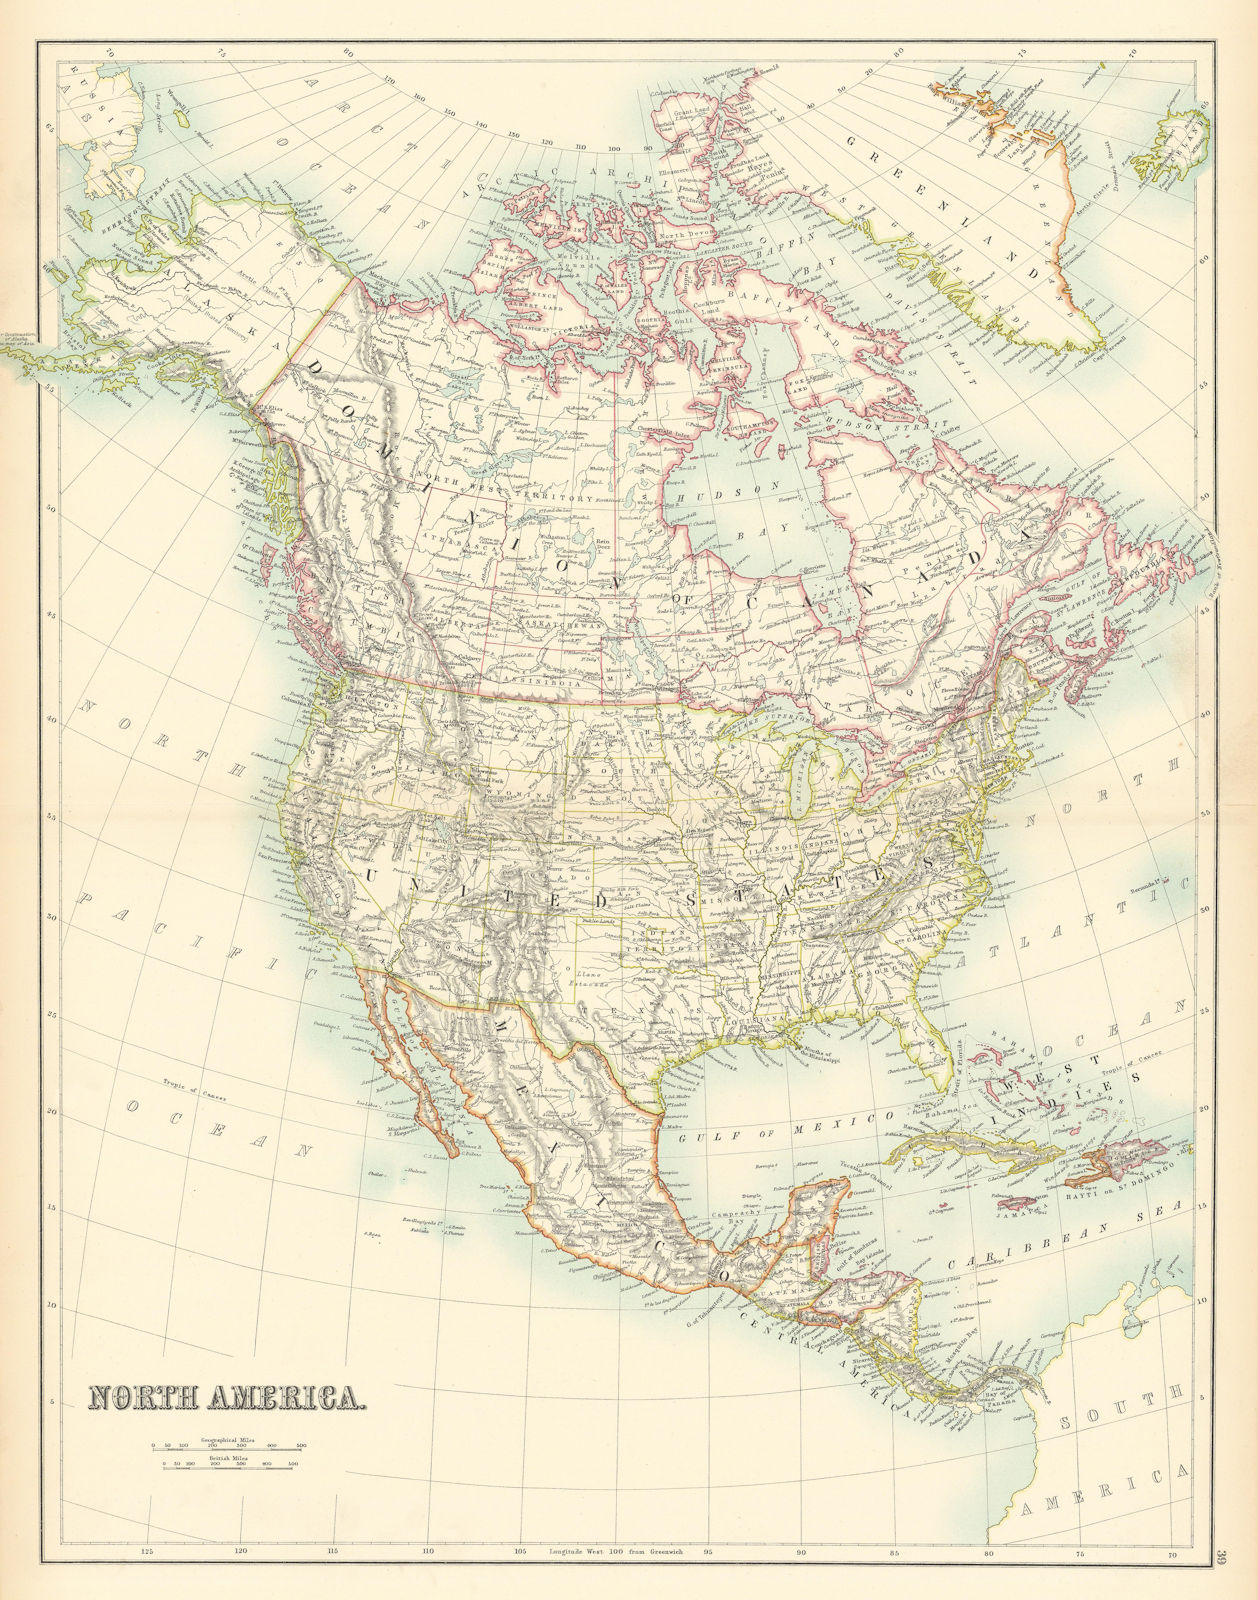 Associate Product North America. USA. Dominion of Canada. Mexico Greenland. BARTHOLOMEW 1898 map